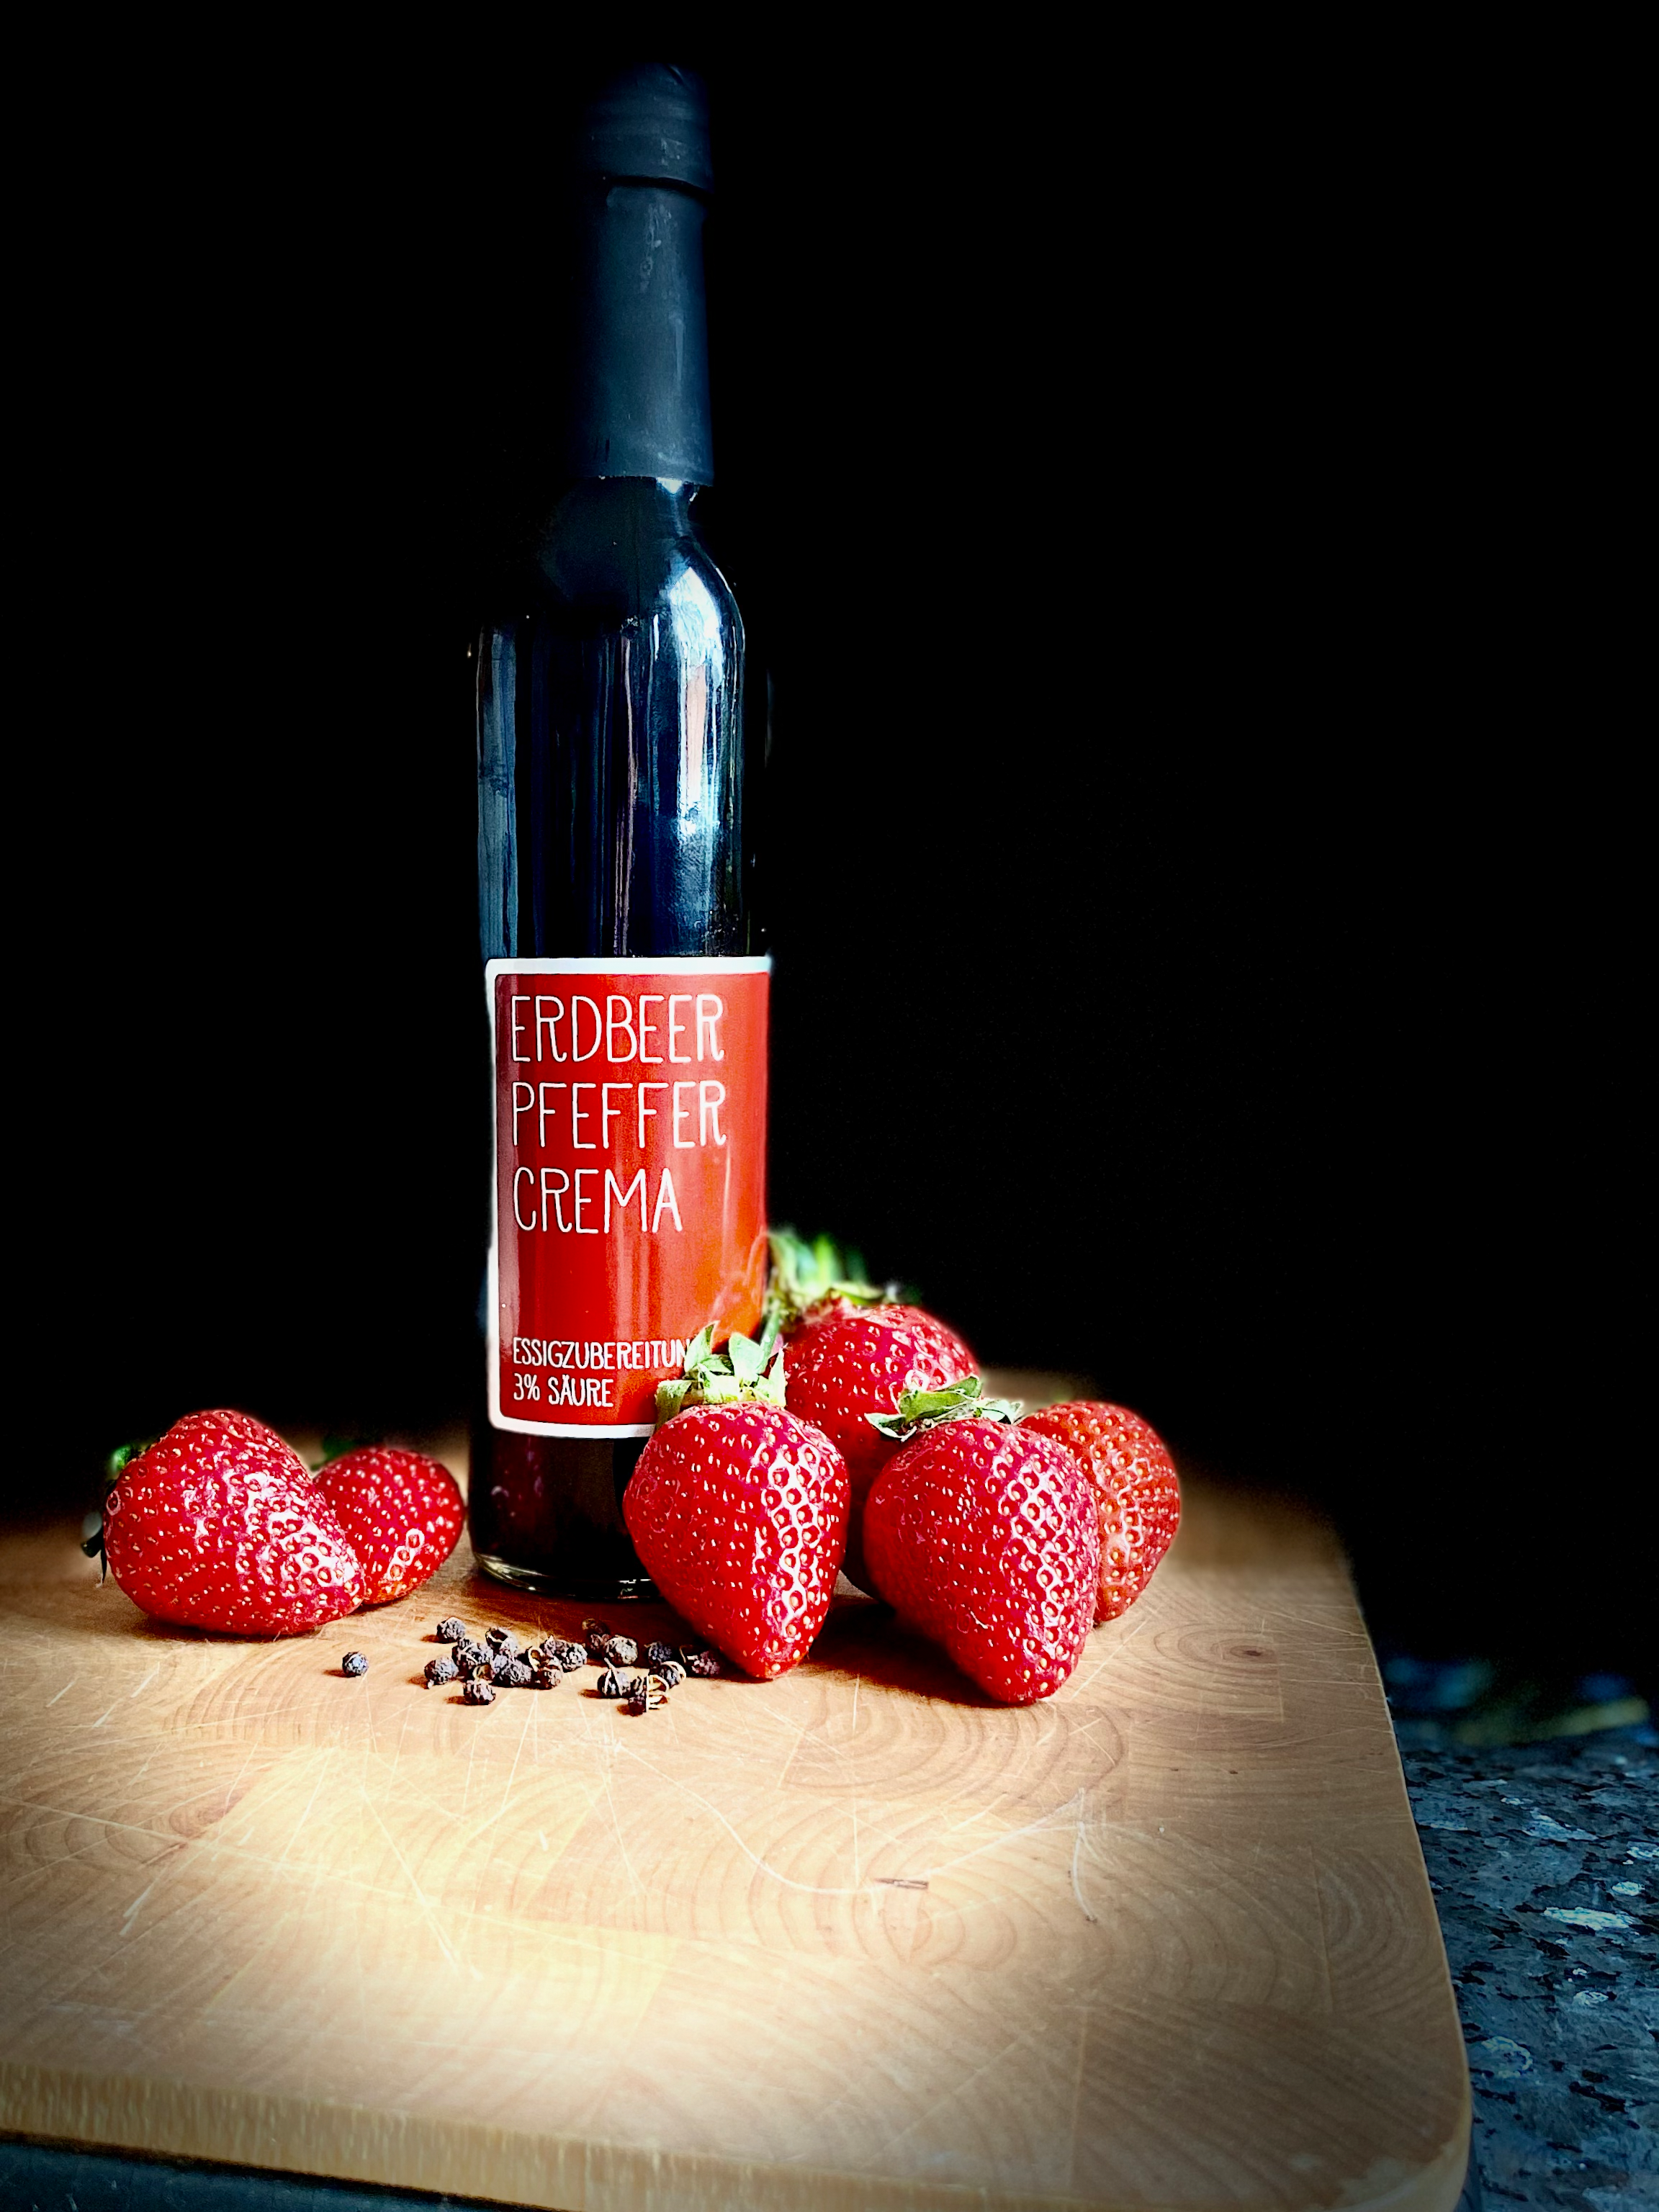 Erdbeer Pfeffer Crema Essigzubereitung 3% Säure